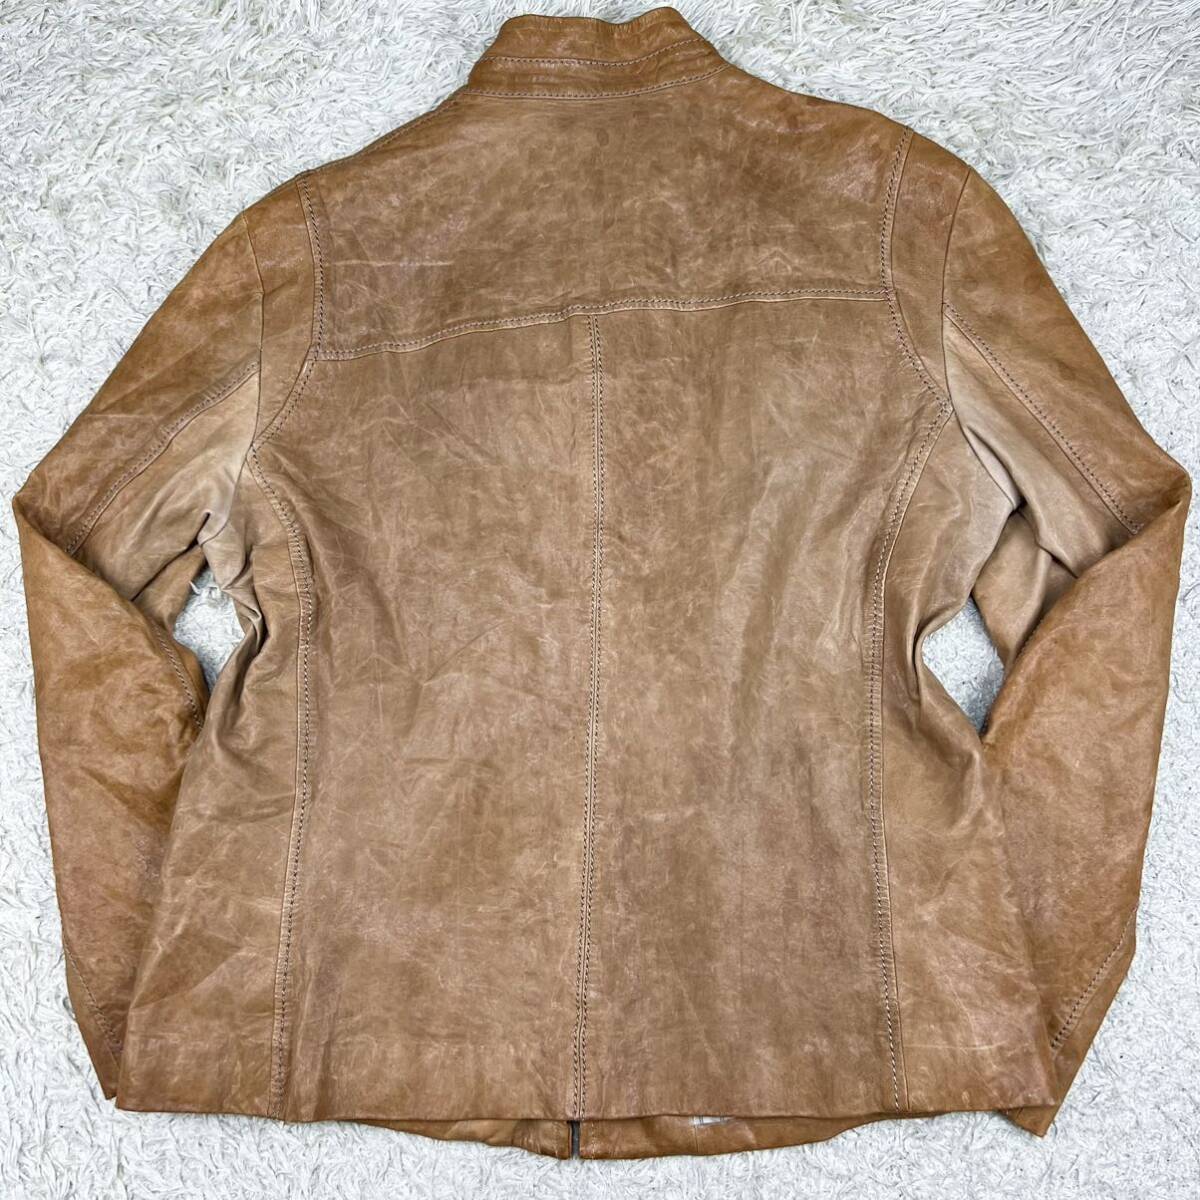  Armani ko let's .-ni[ adult color .]ARMANI COLLEZIONI rider's jacket L sheep leather ram leather lambskin feeling of luxury * comfortable * spring 